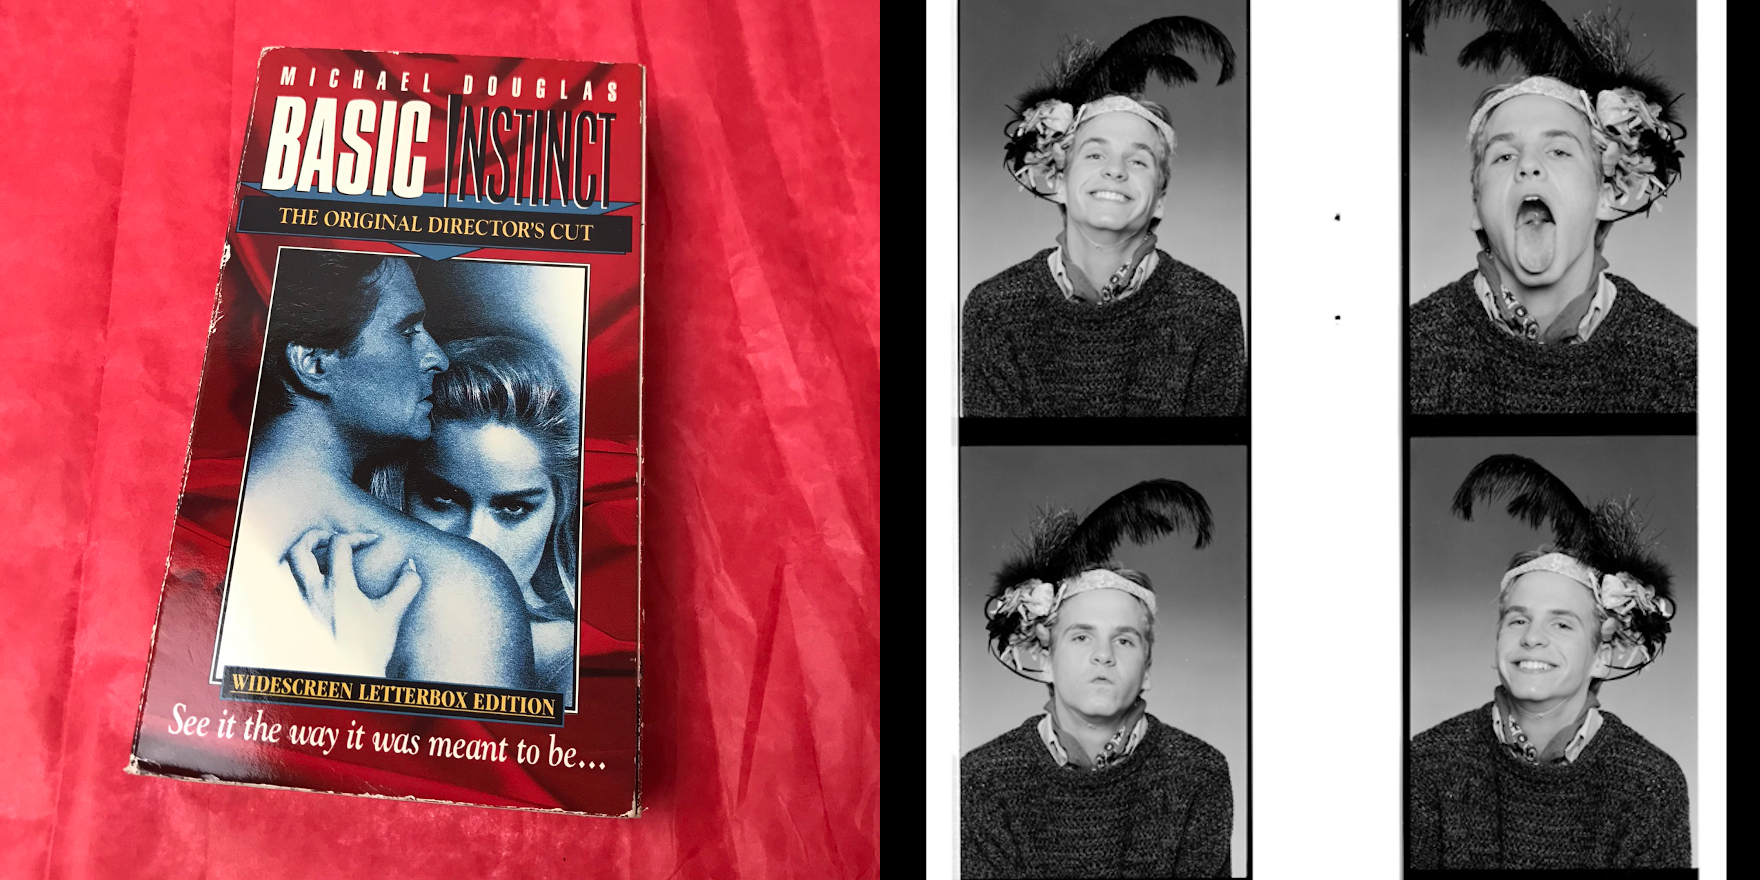 Sharon Stone, Michael Douglas Mark Basic Instinct's 30th Anniversary